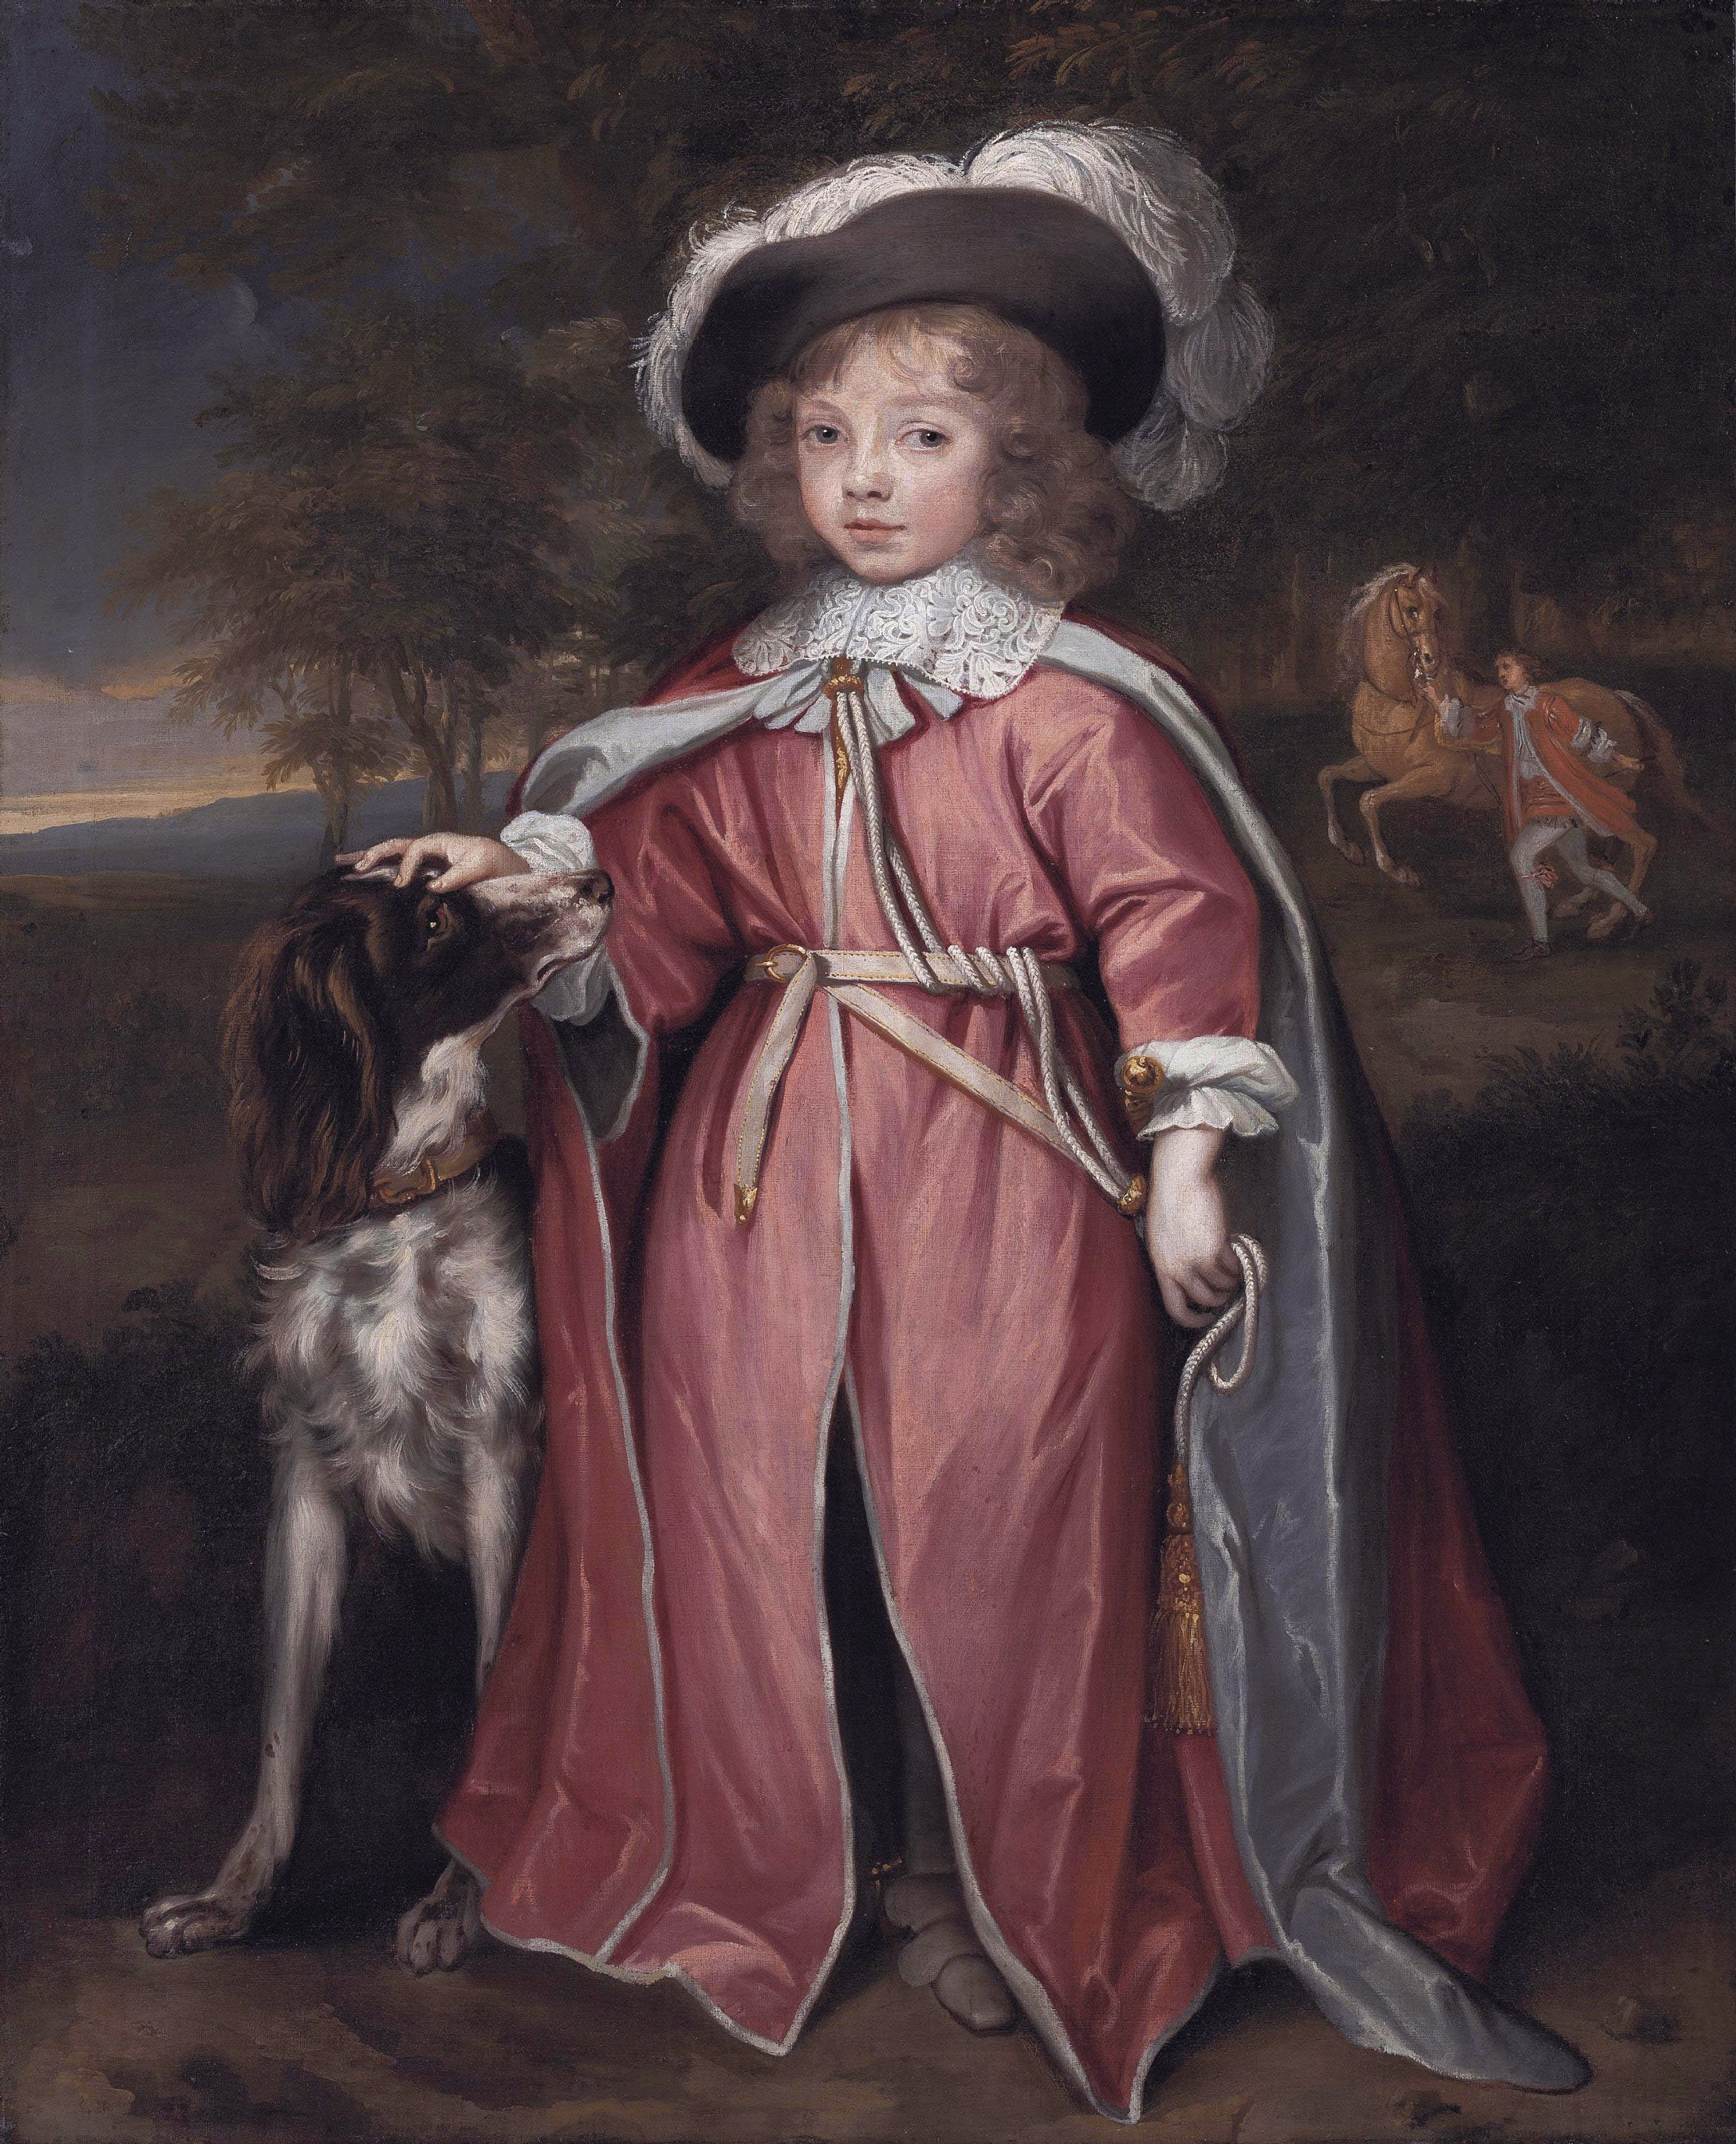 Philip, 7th Earl of Pembroke (1652-1683) by John Michael Wright (1617-1694)